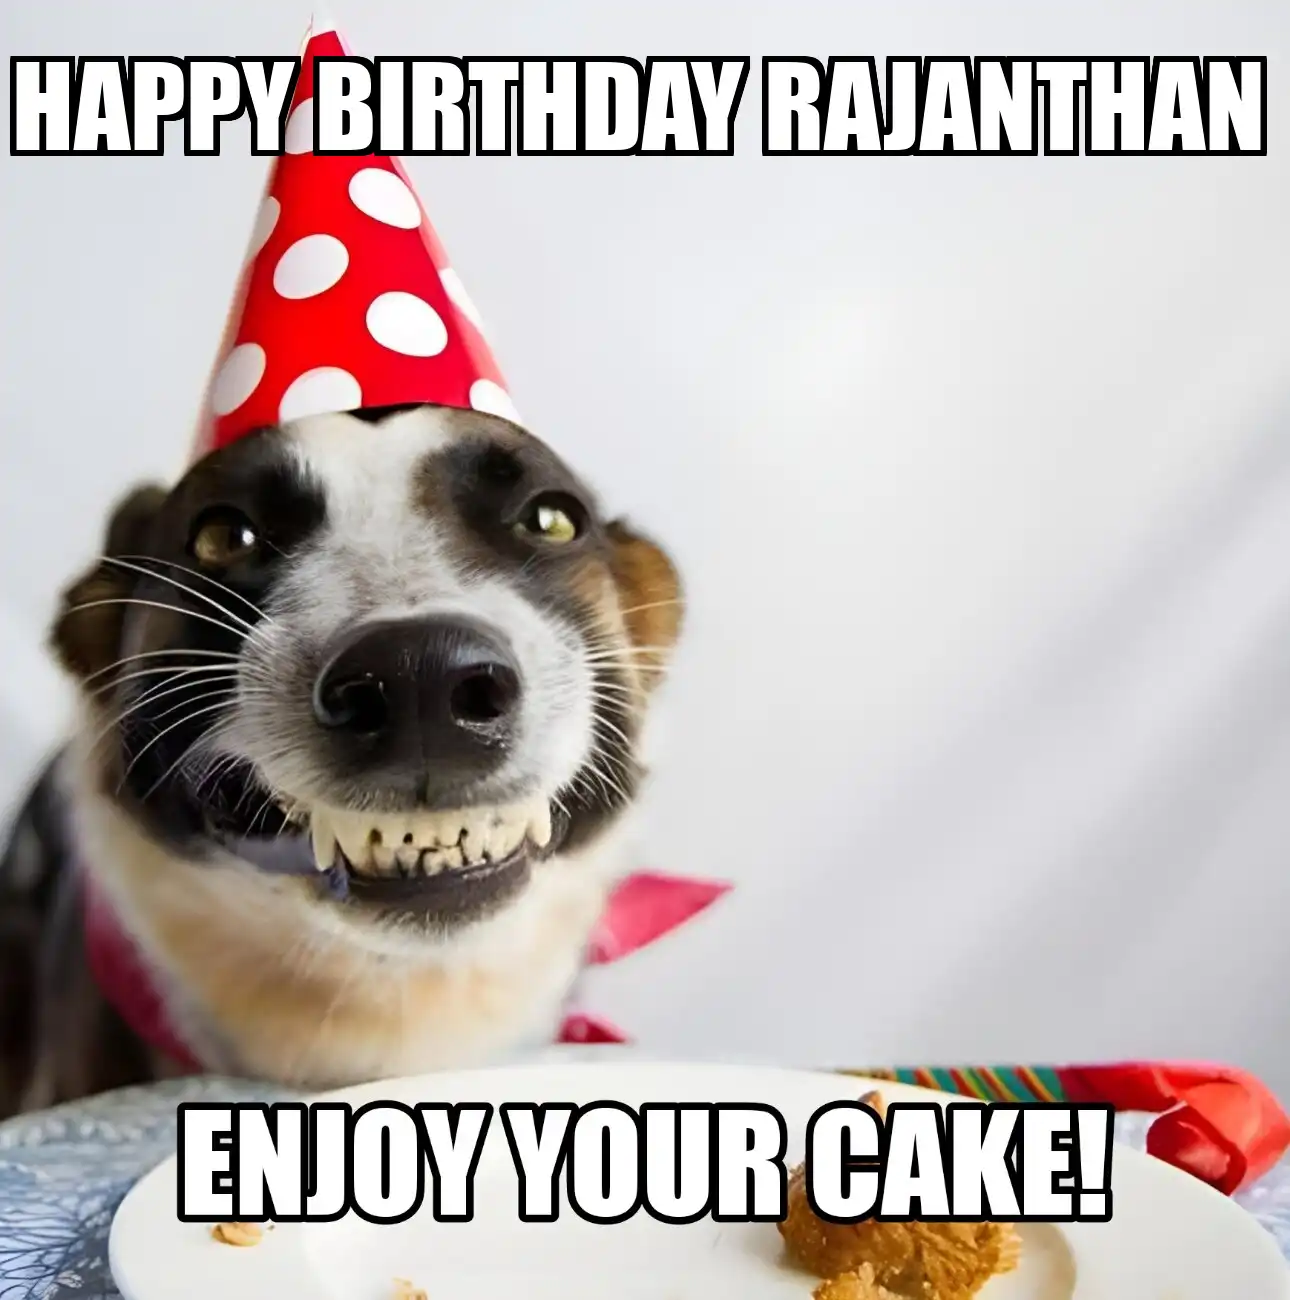 Happy Birthday Rajanthan Enjoy Your Cake Dog Meme